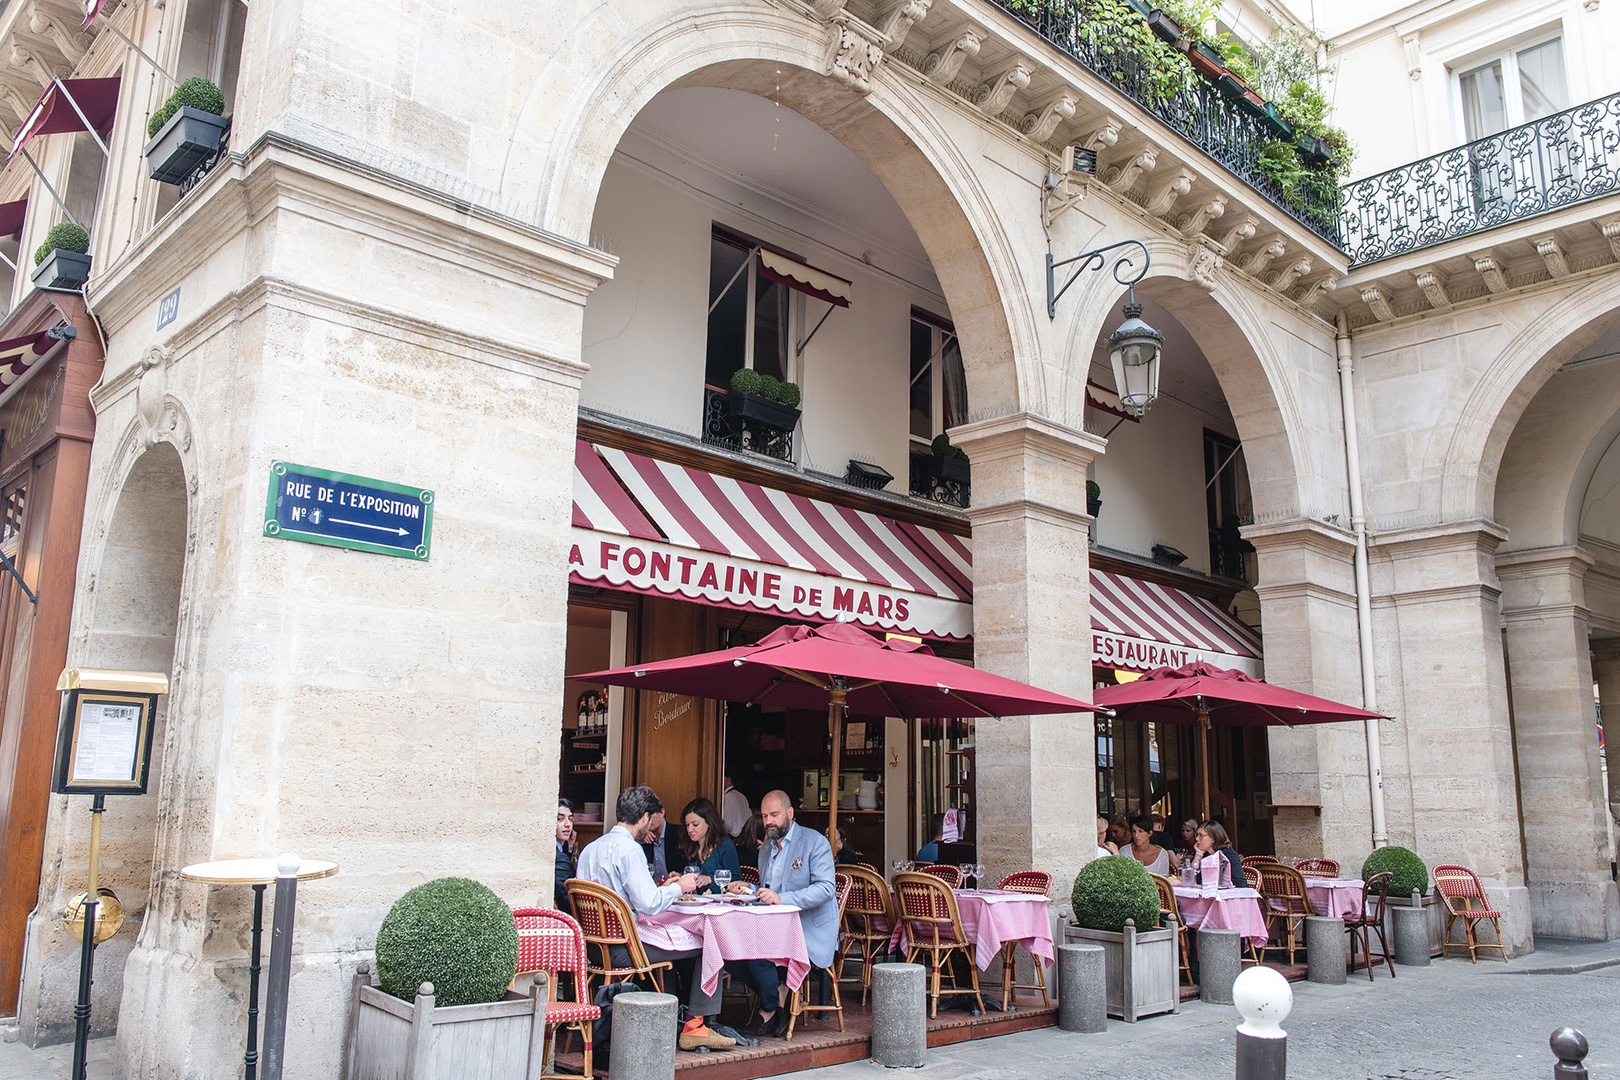 Excellent restaurants right at your doorstep in the 7th arrondissement.